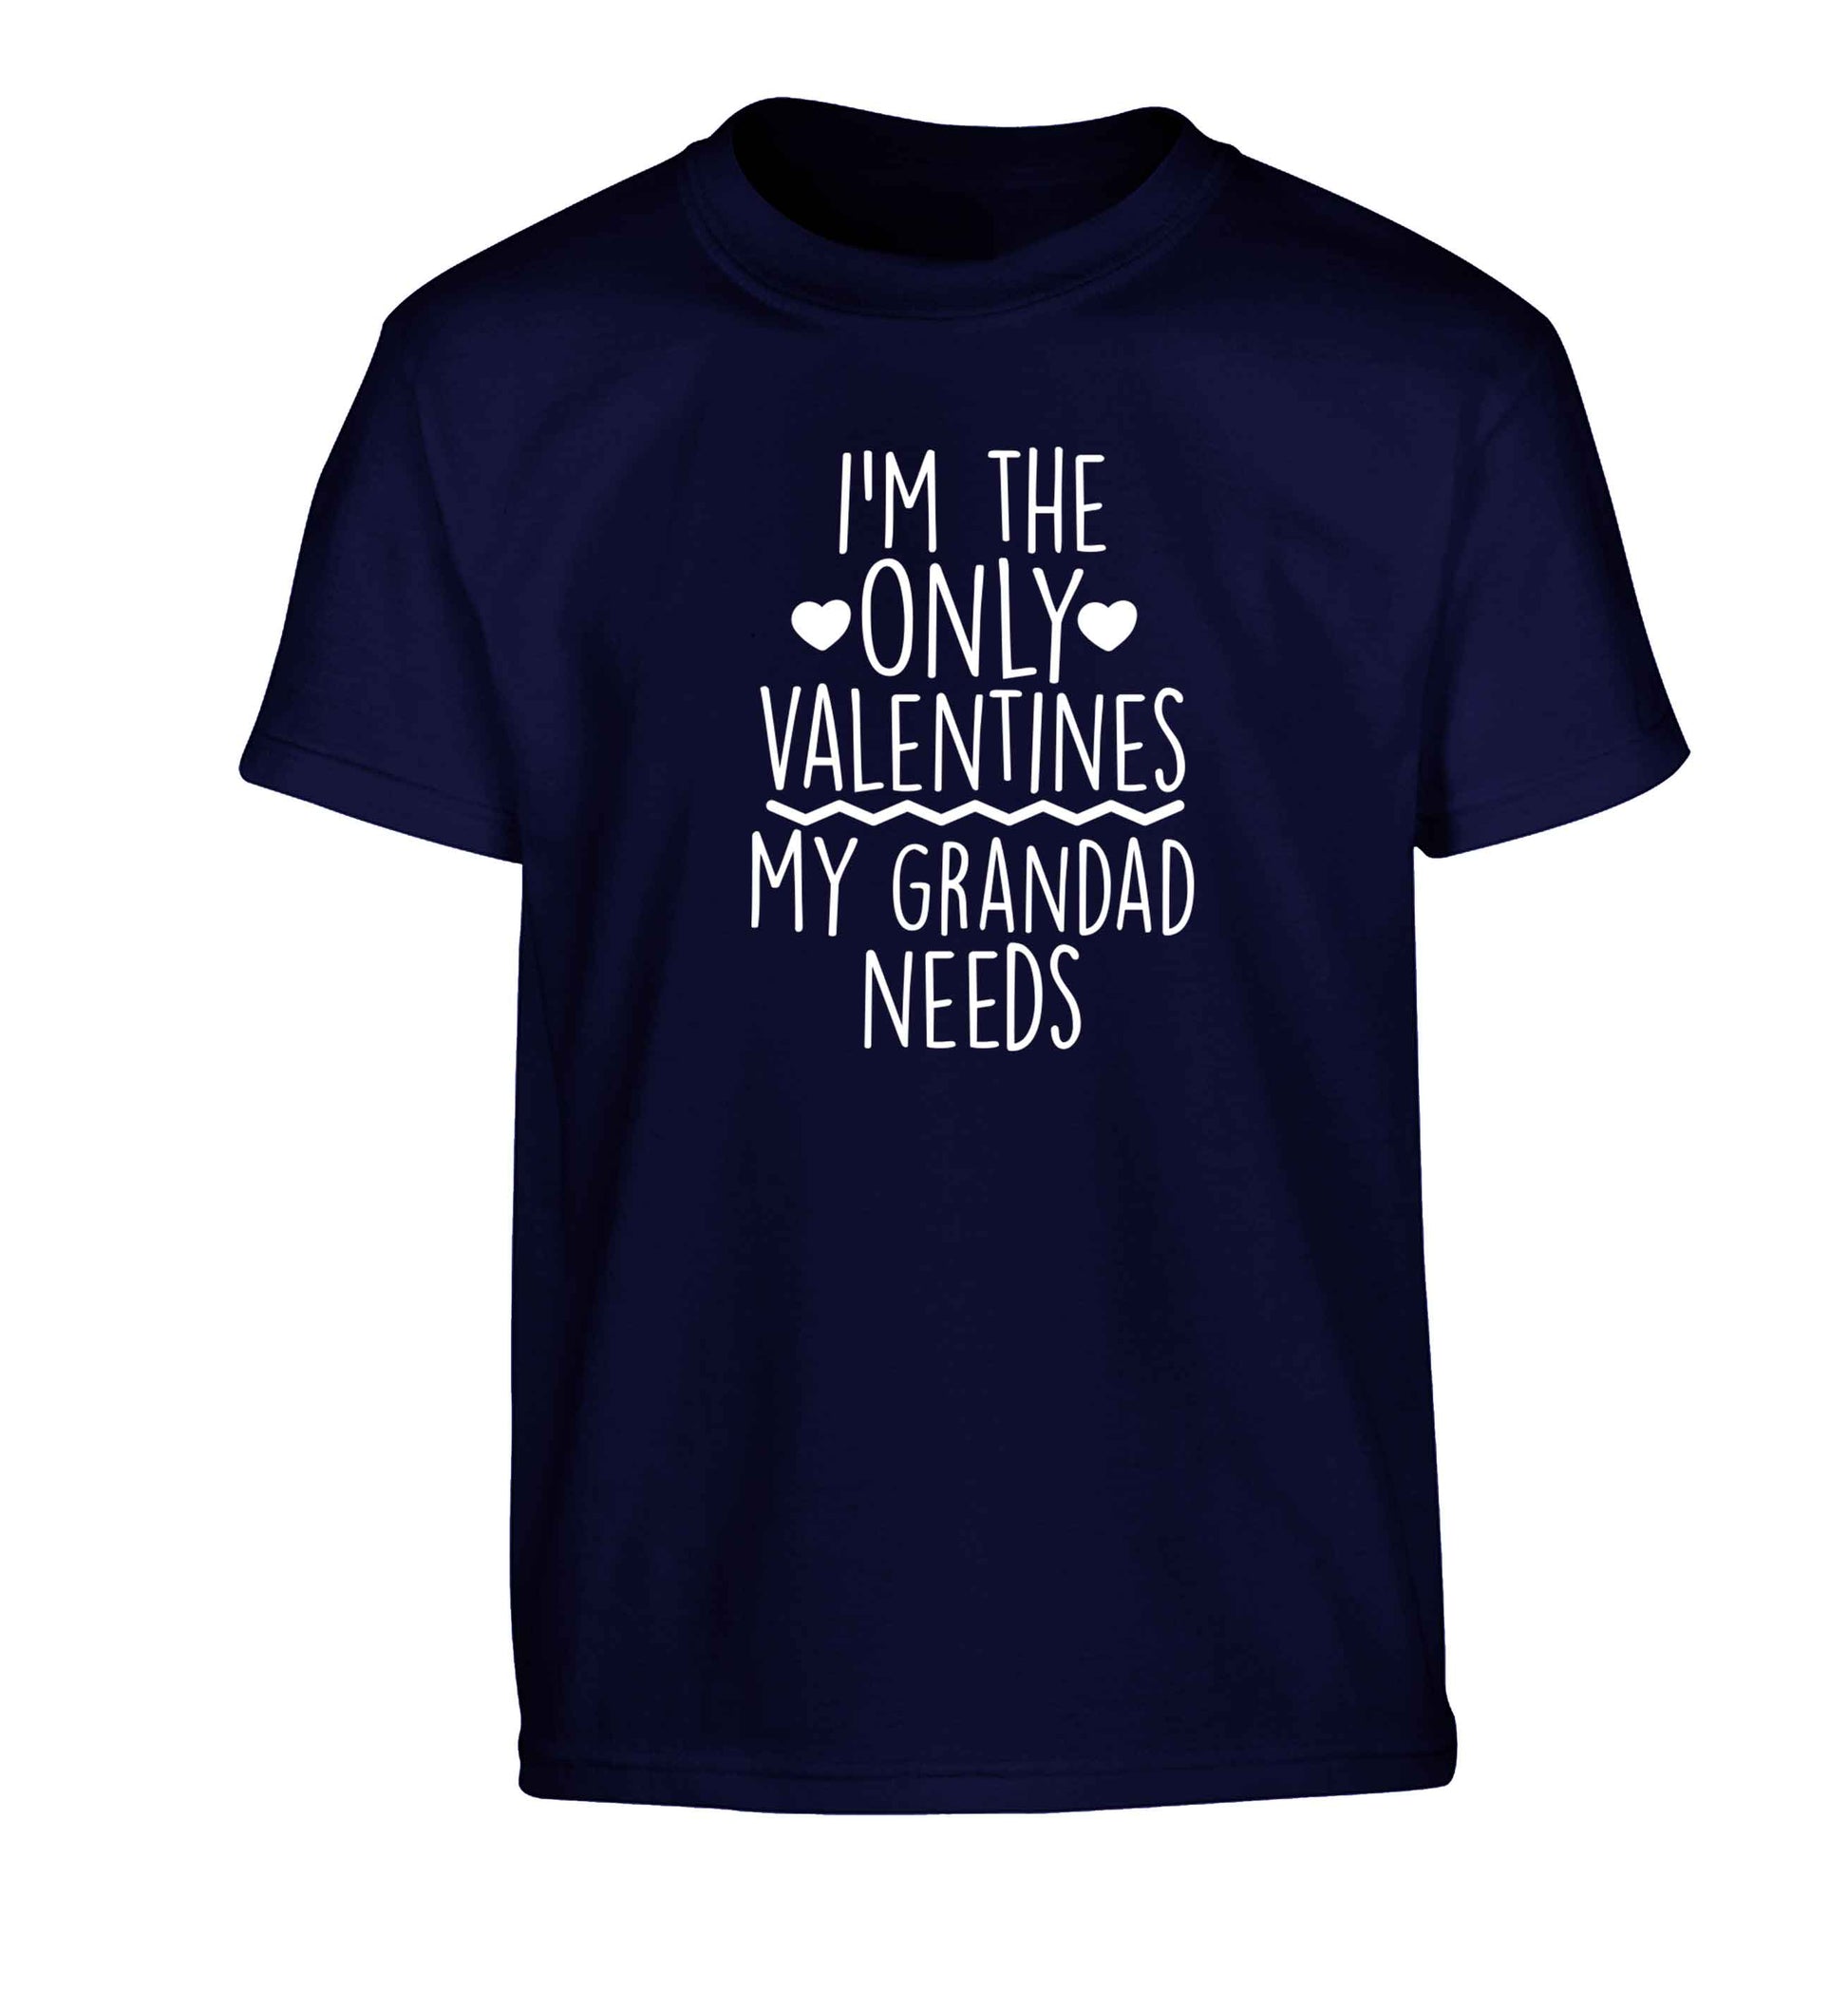 I'm the only valentines my grandad needs Children's navy Tshirt 12-13 Years